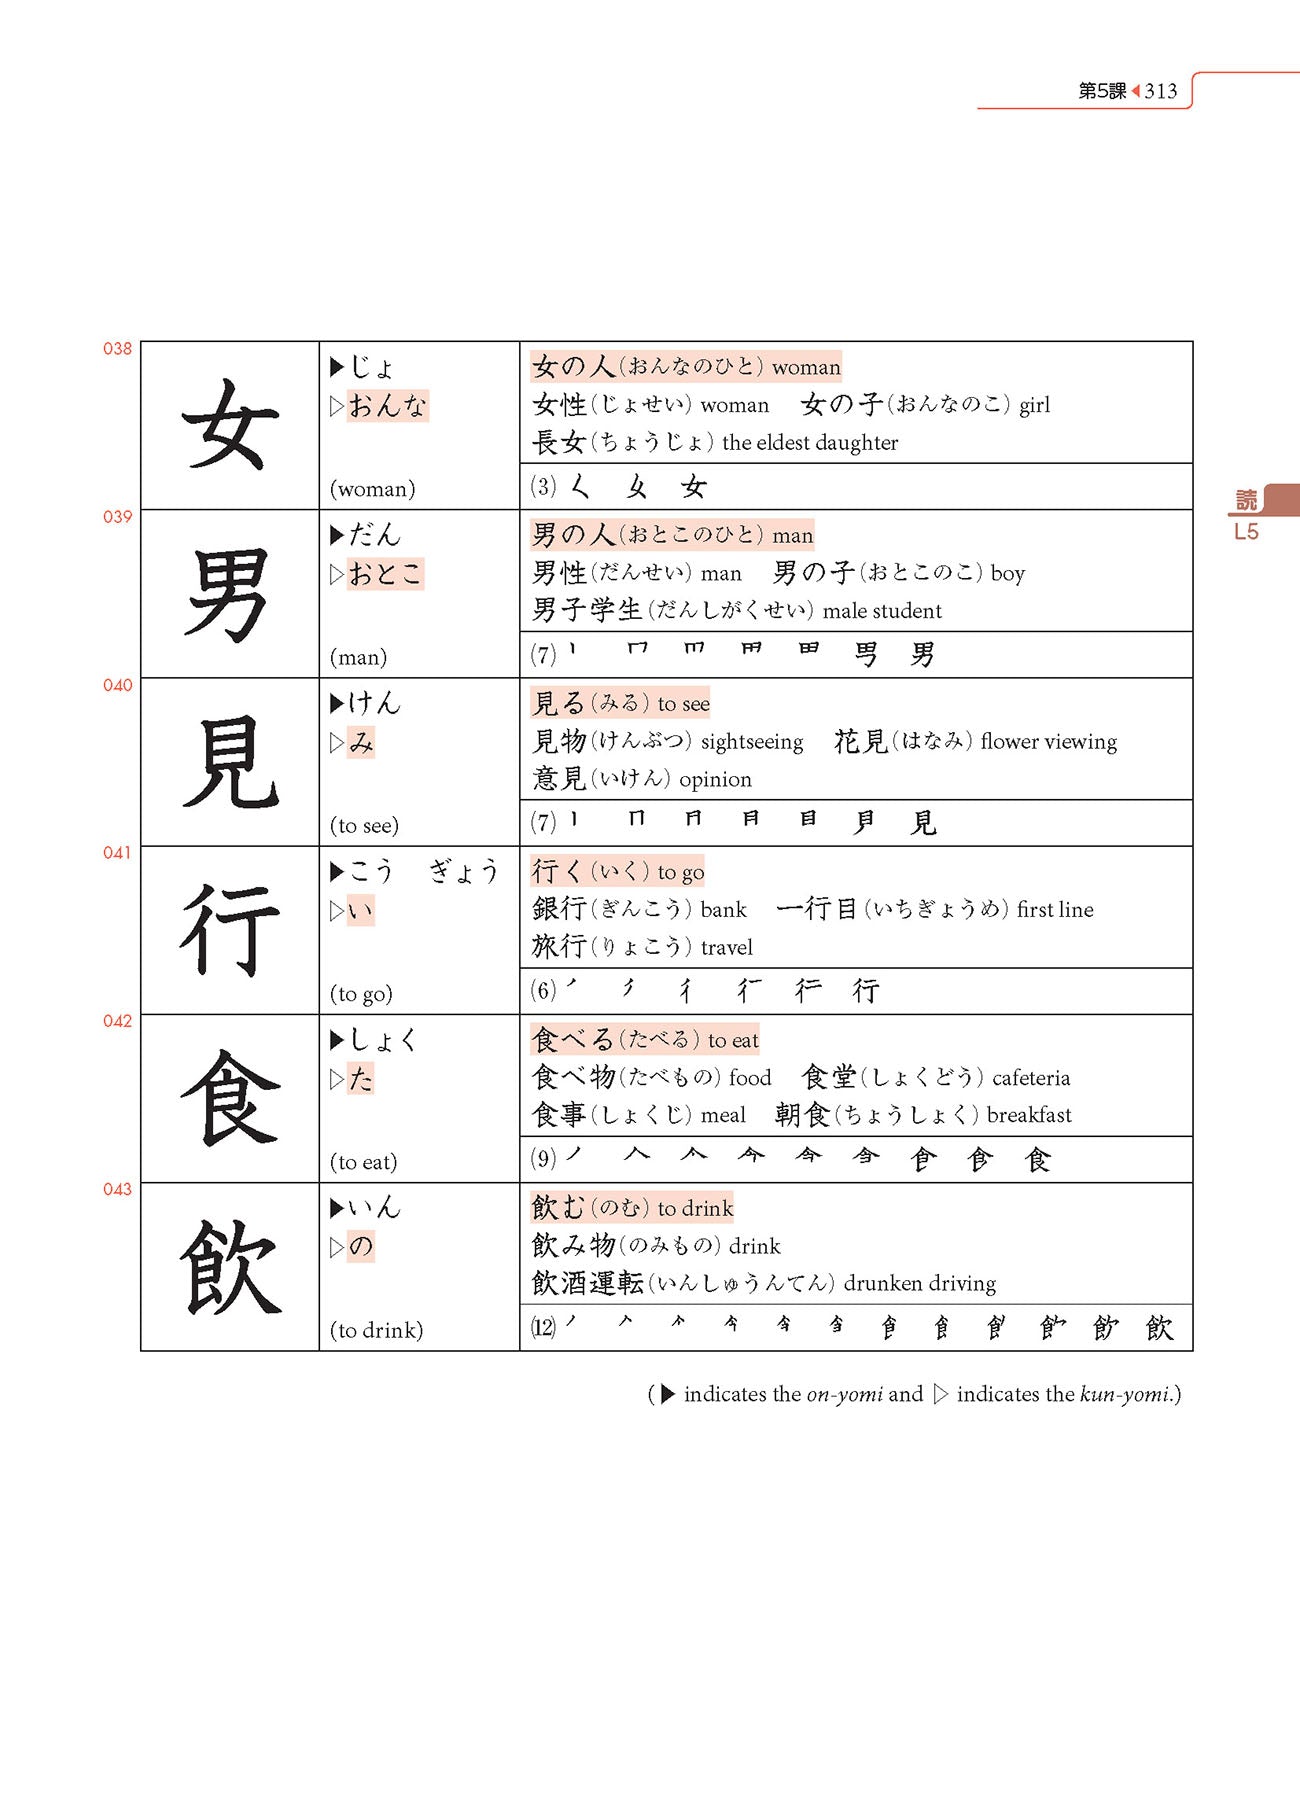 Genki Textbook 1 - Sample Page 2